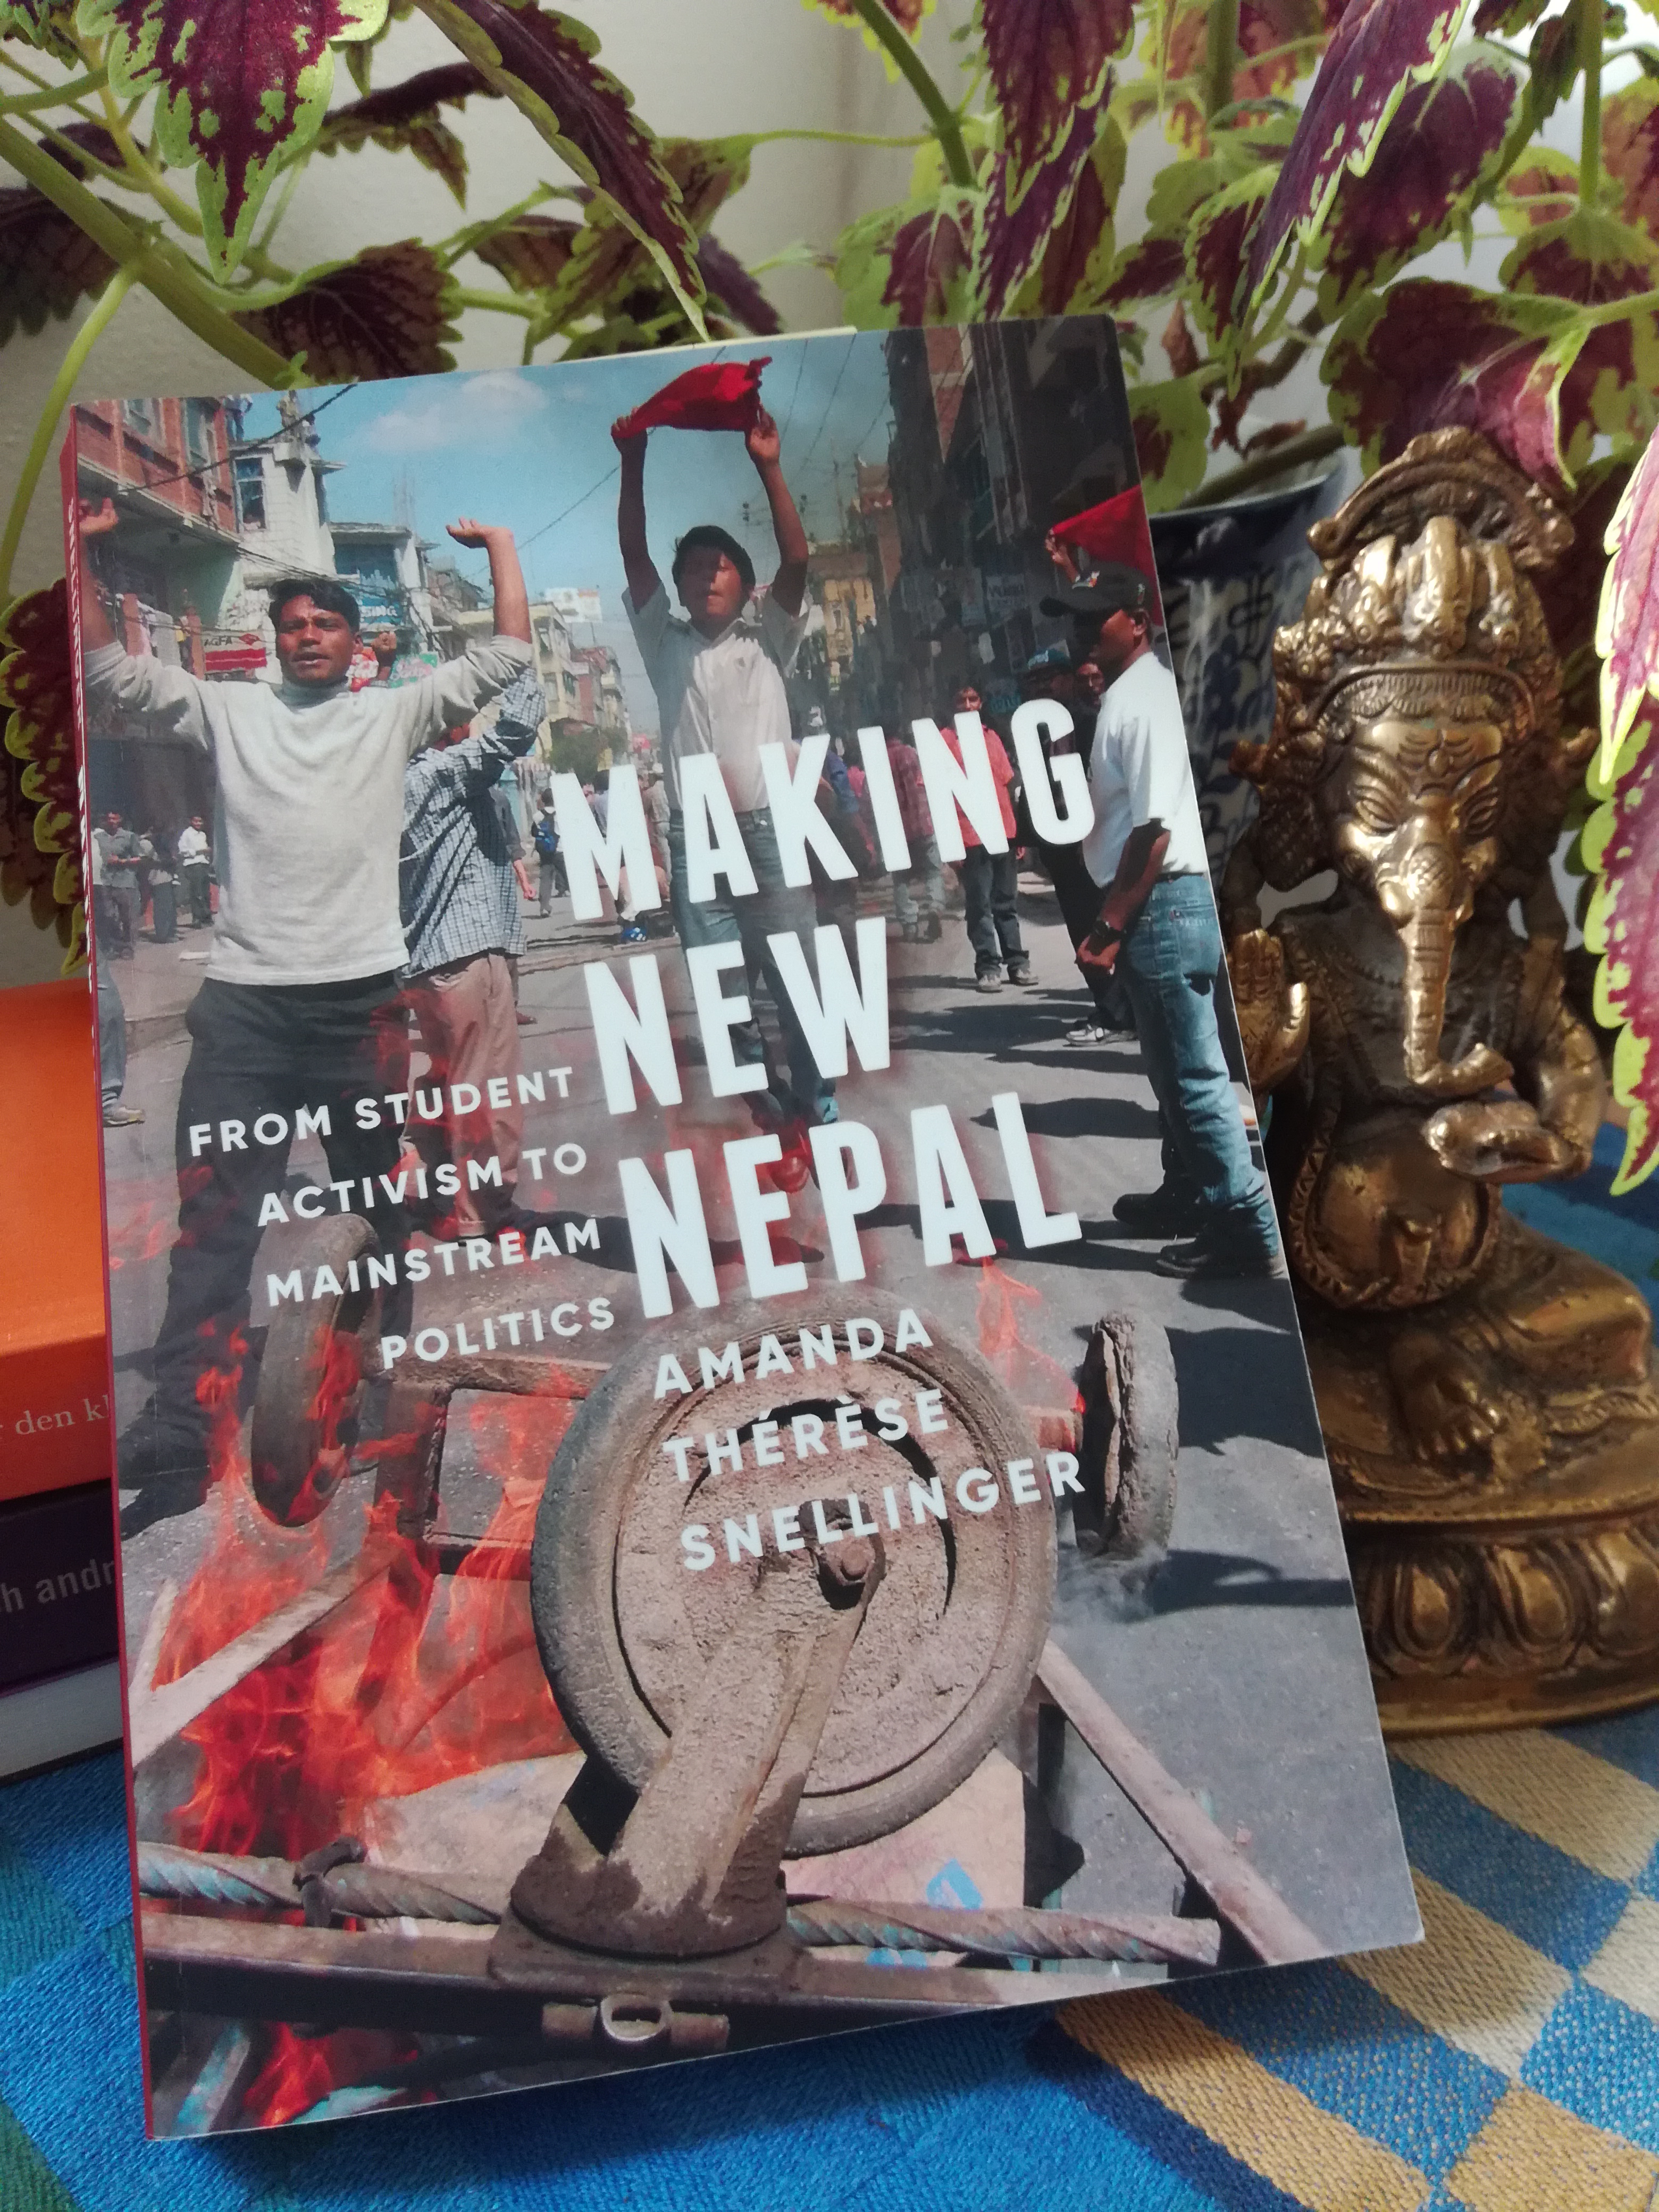 I boken Making New Nepal beskriver antropologen Amanda Thérése Snellinger studentkårernas roll i Nepals politik.